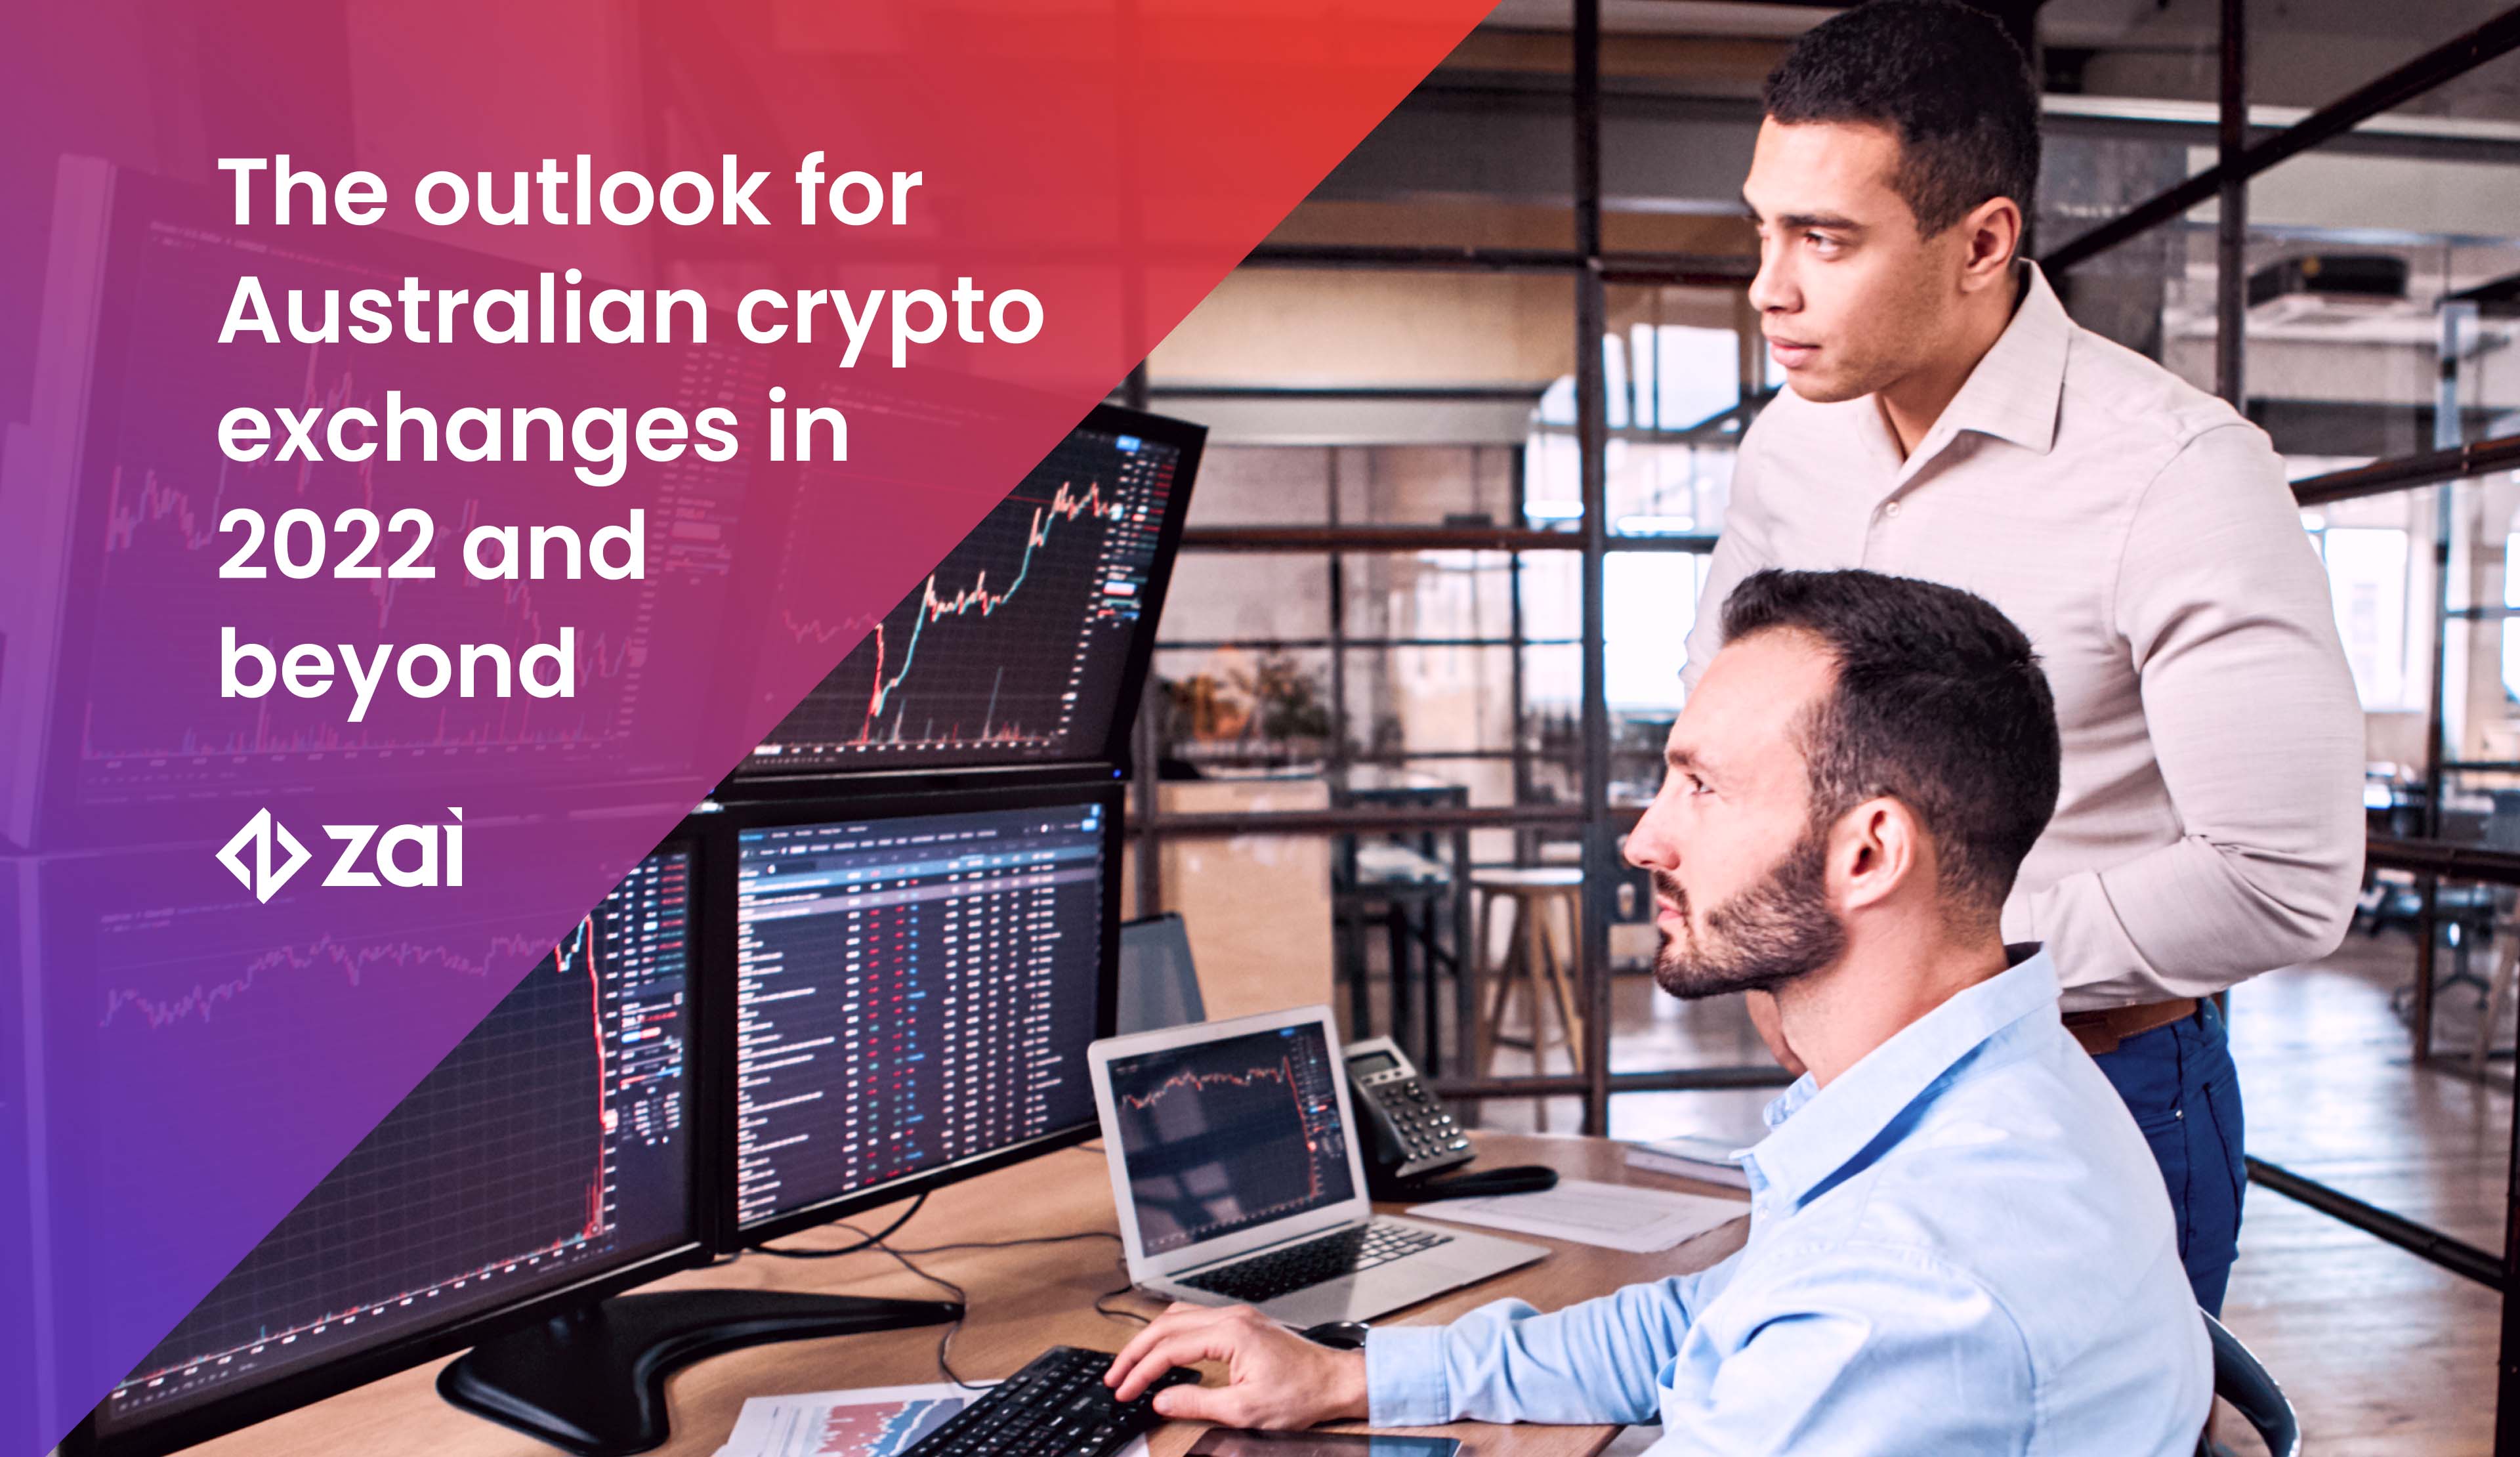 Australian crypto exchanges: opportunities ahead